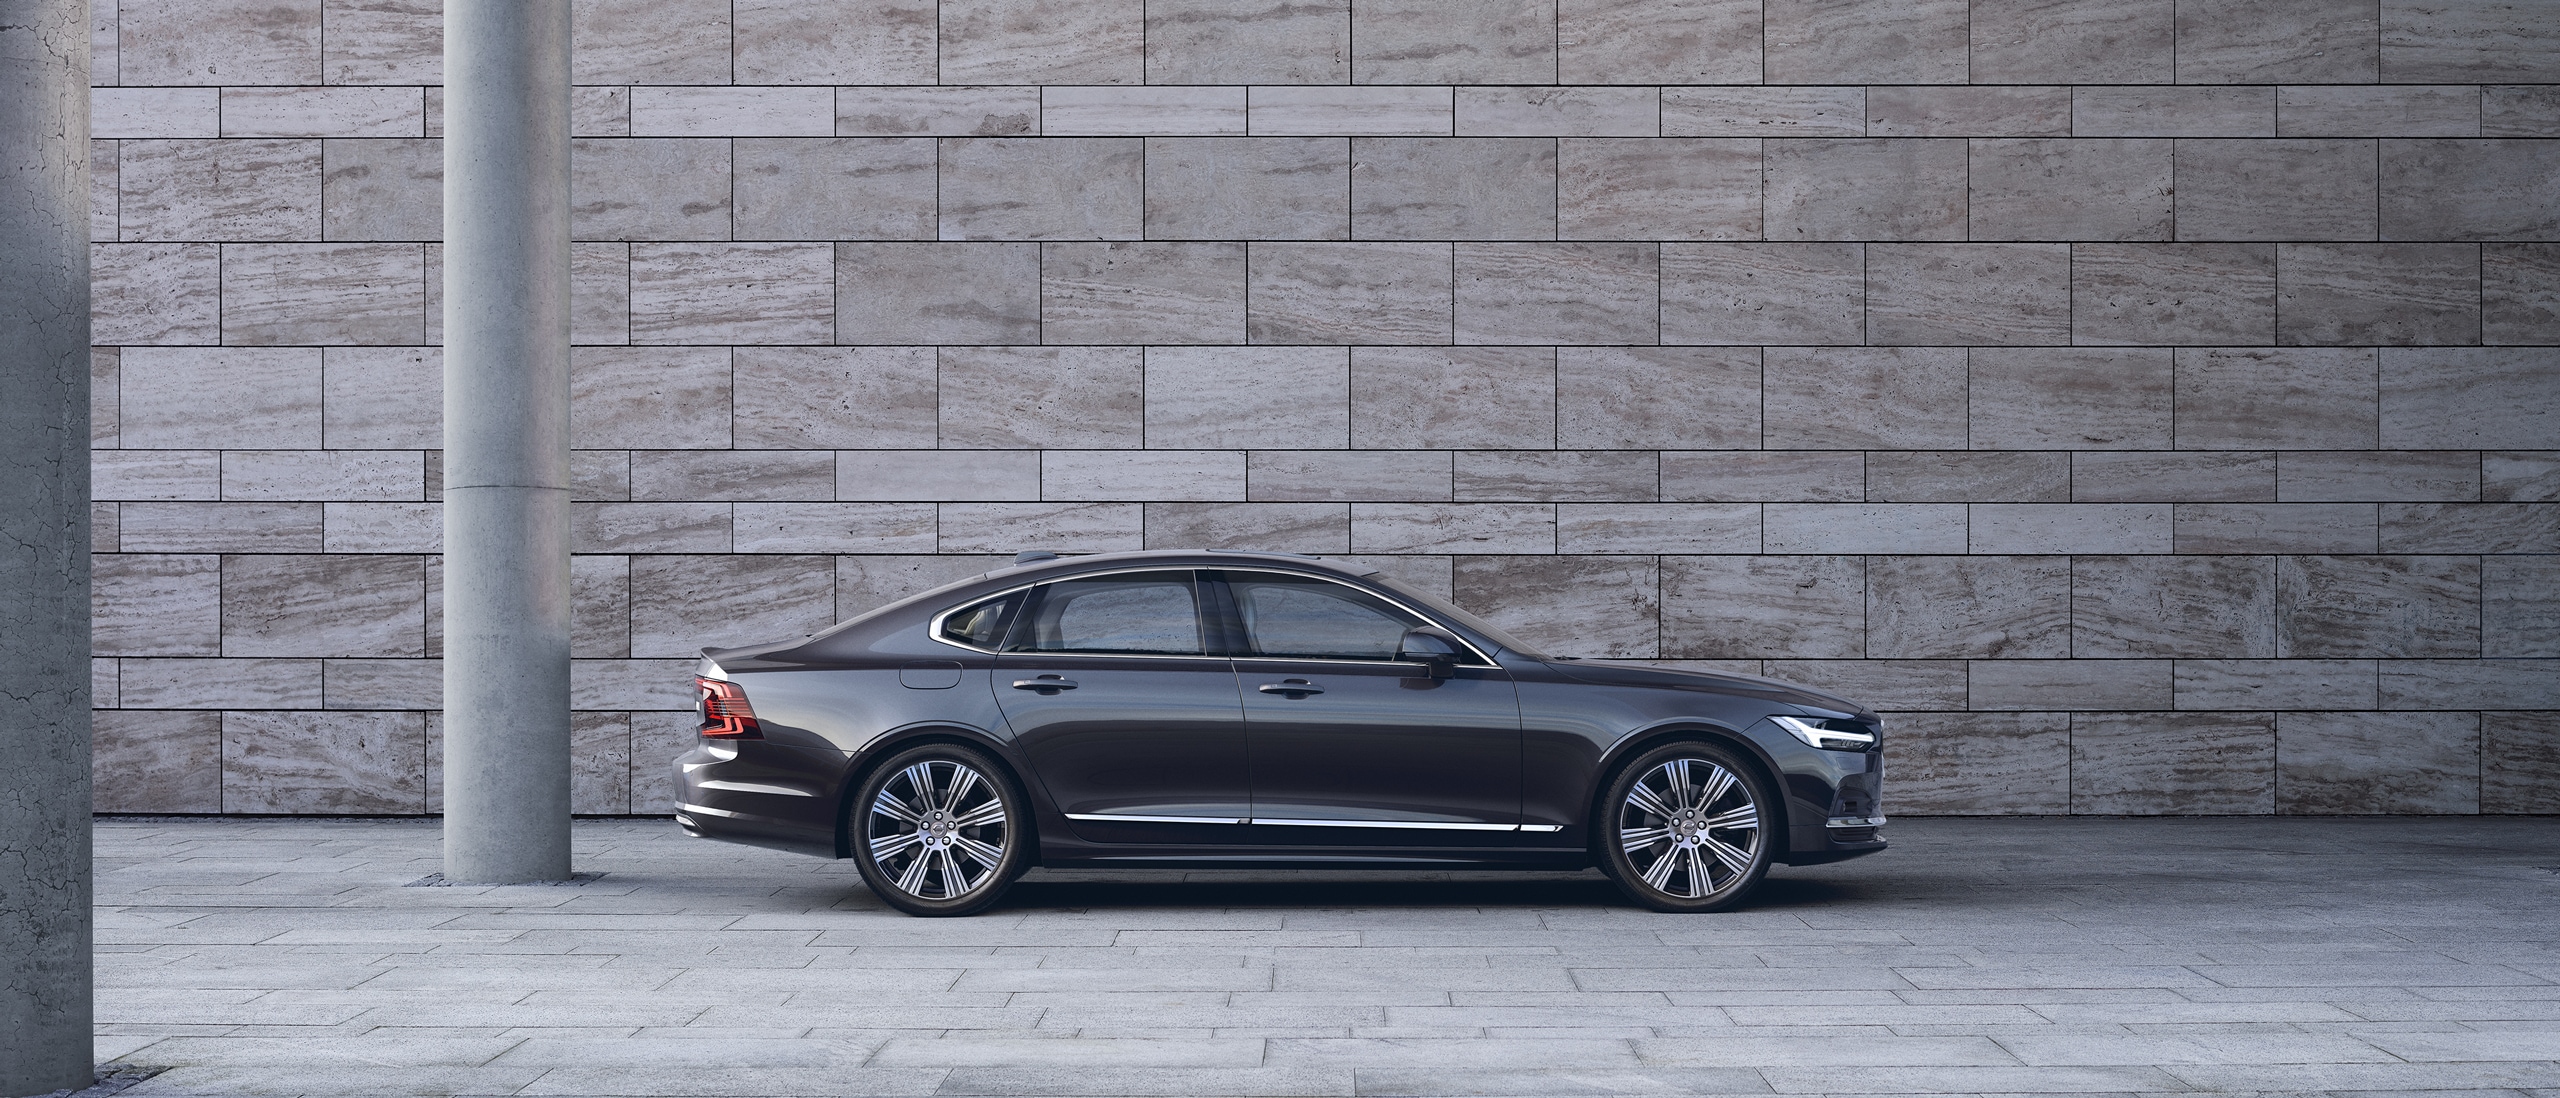 Bočni prikaz modela Volvo S90, parkiranog ispred sivog betonskog zida.